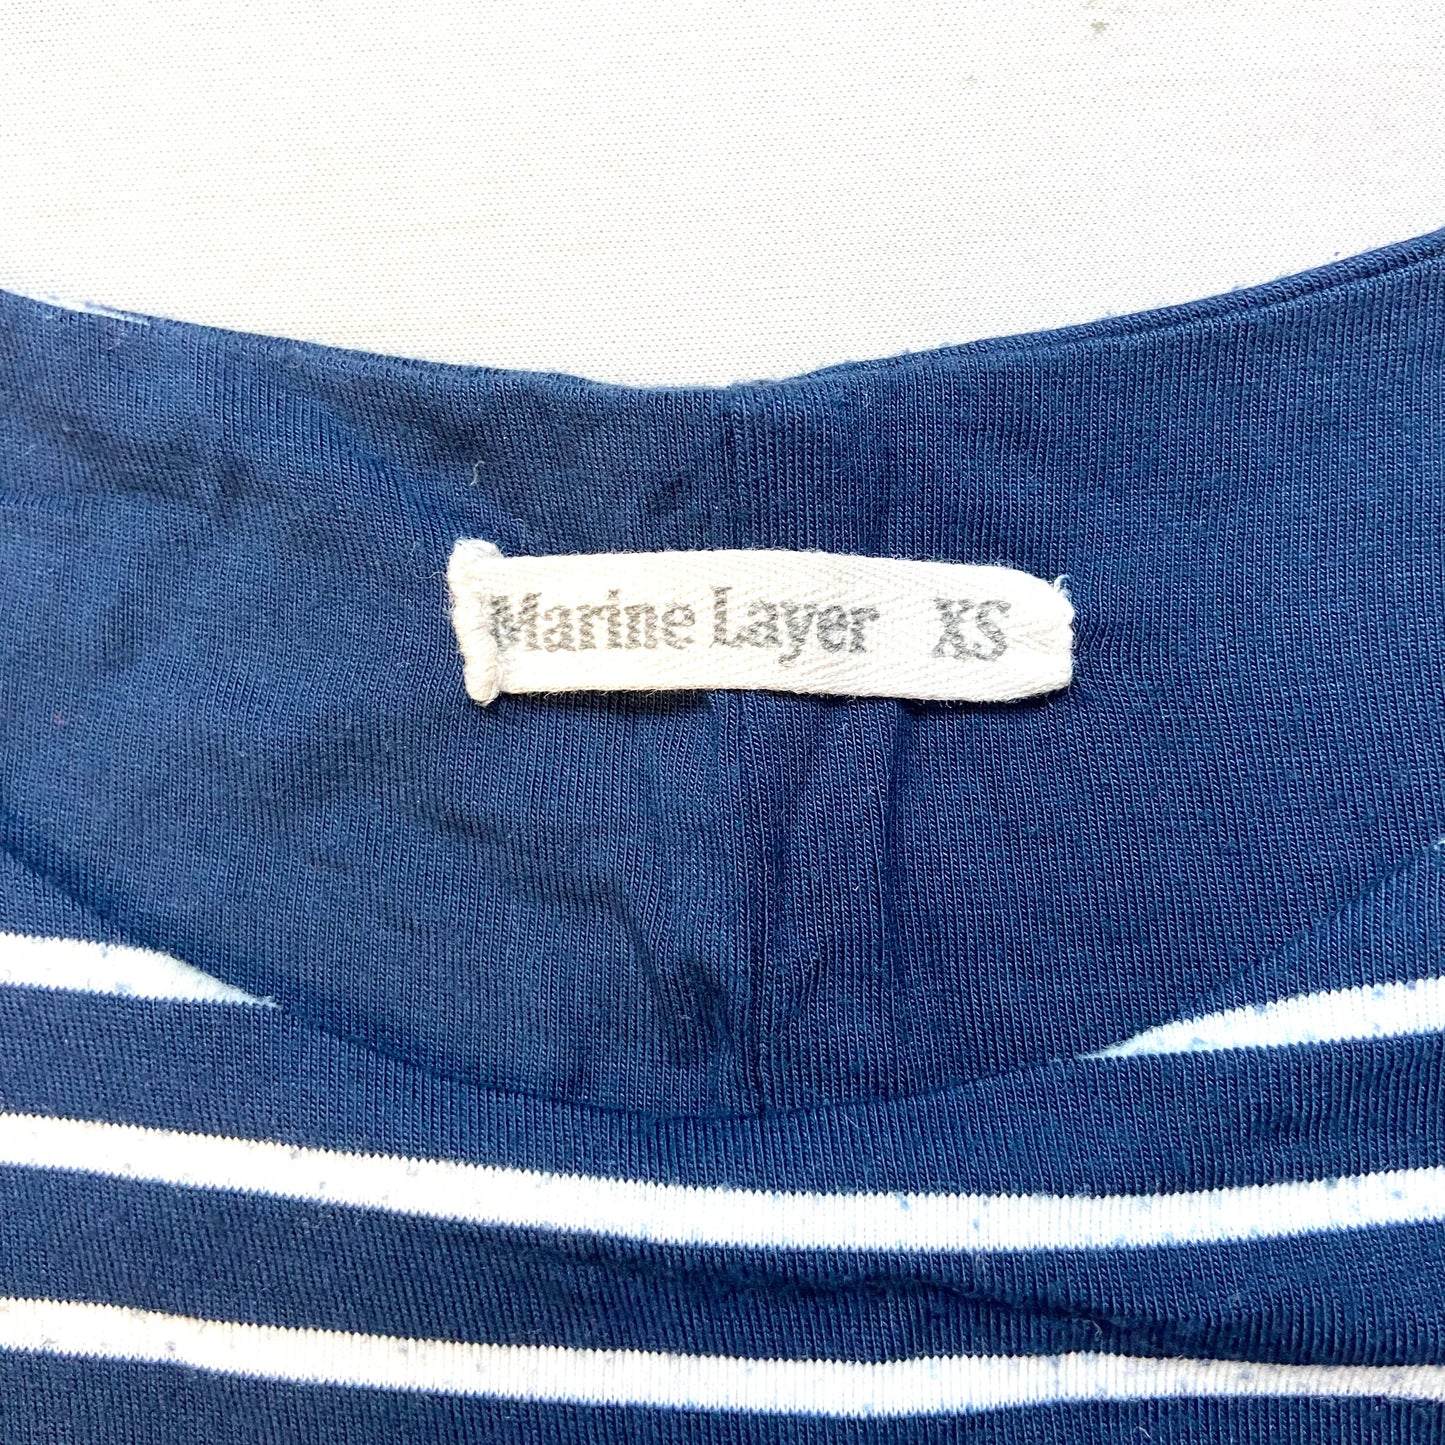 Dress Casual Midi By Marine Layer  Size: Xs